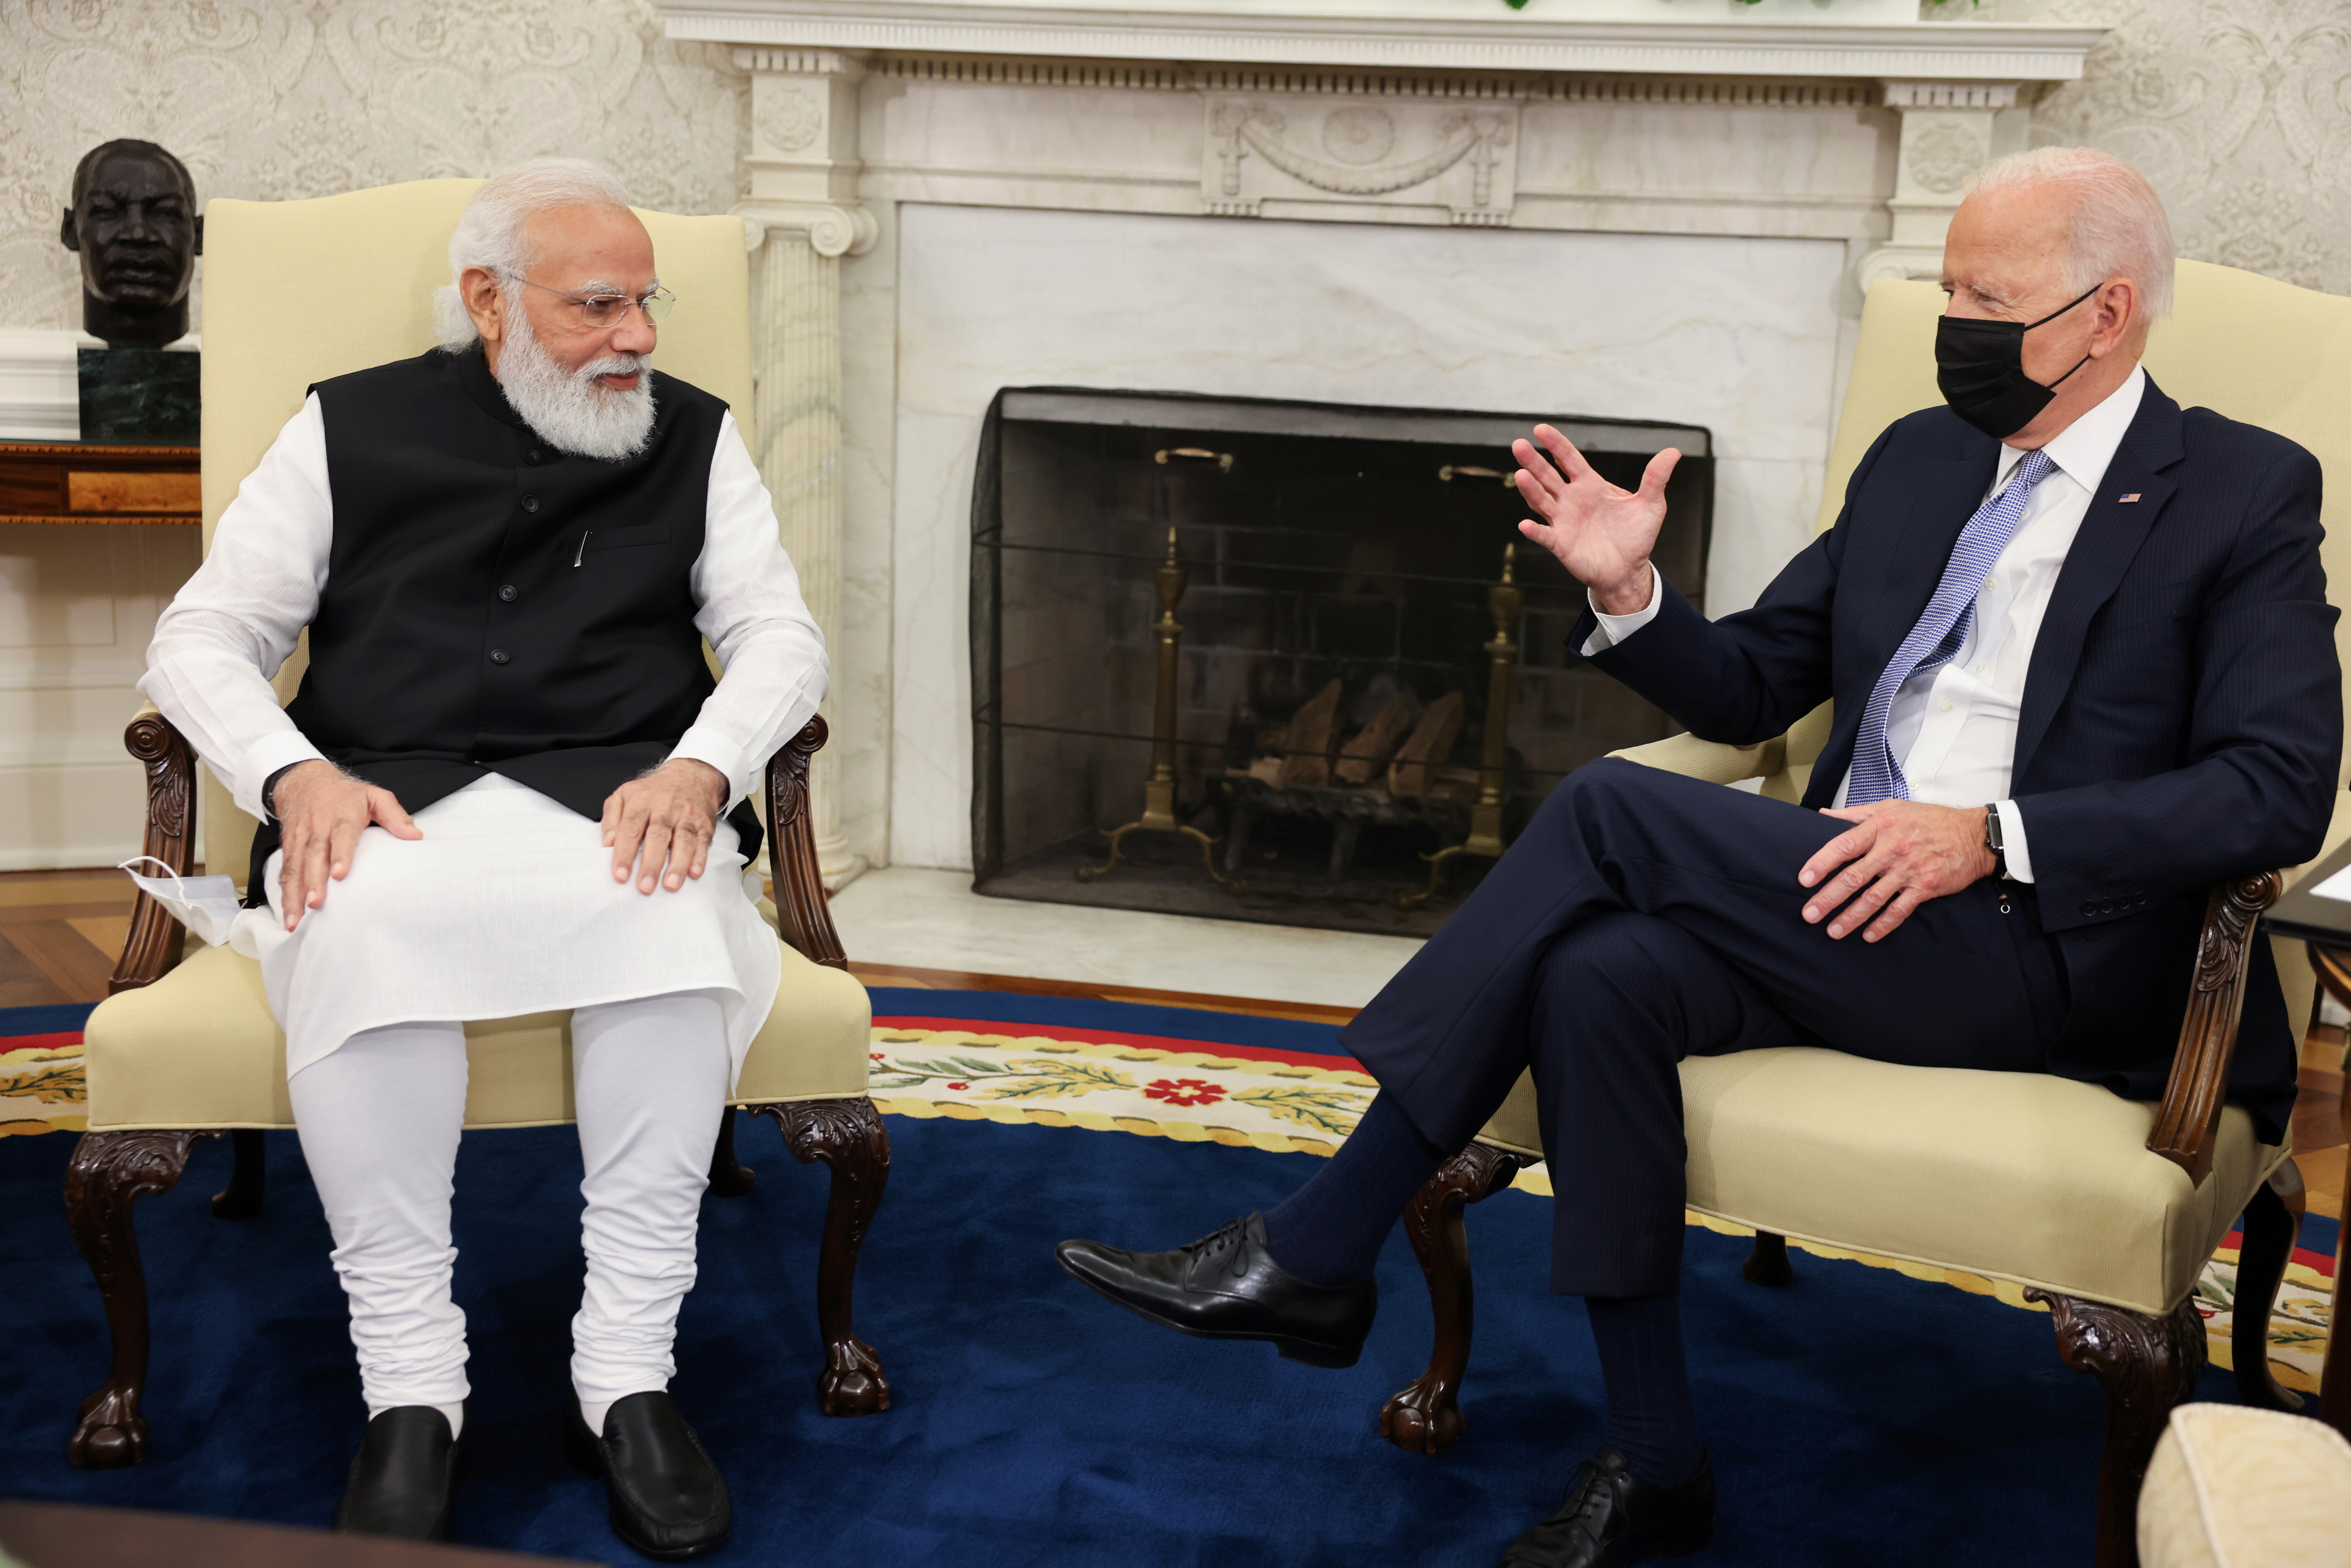 U.S. President Joe Biden meets with Indian Prime Minister Narendra Modi at the White House in Washington